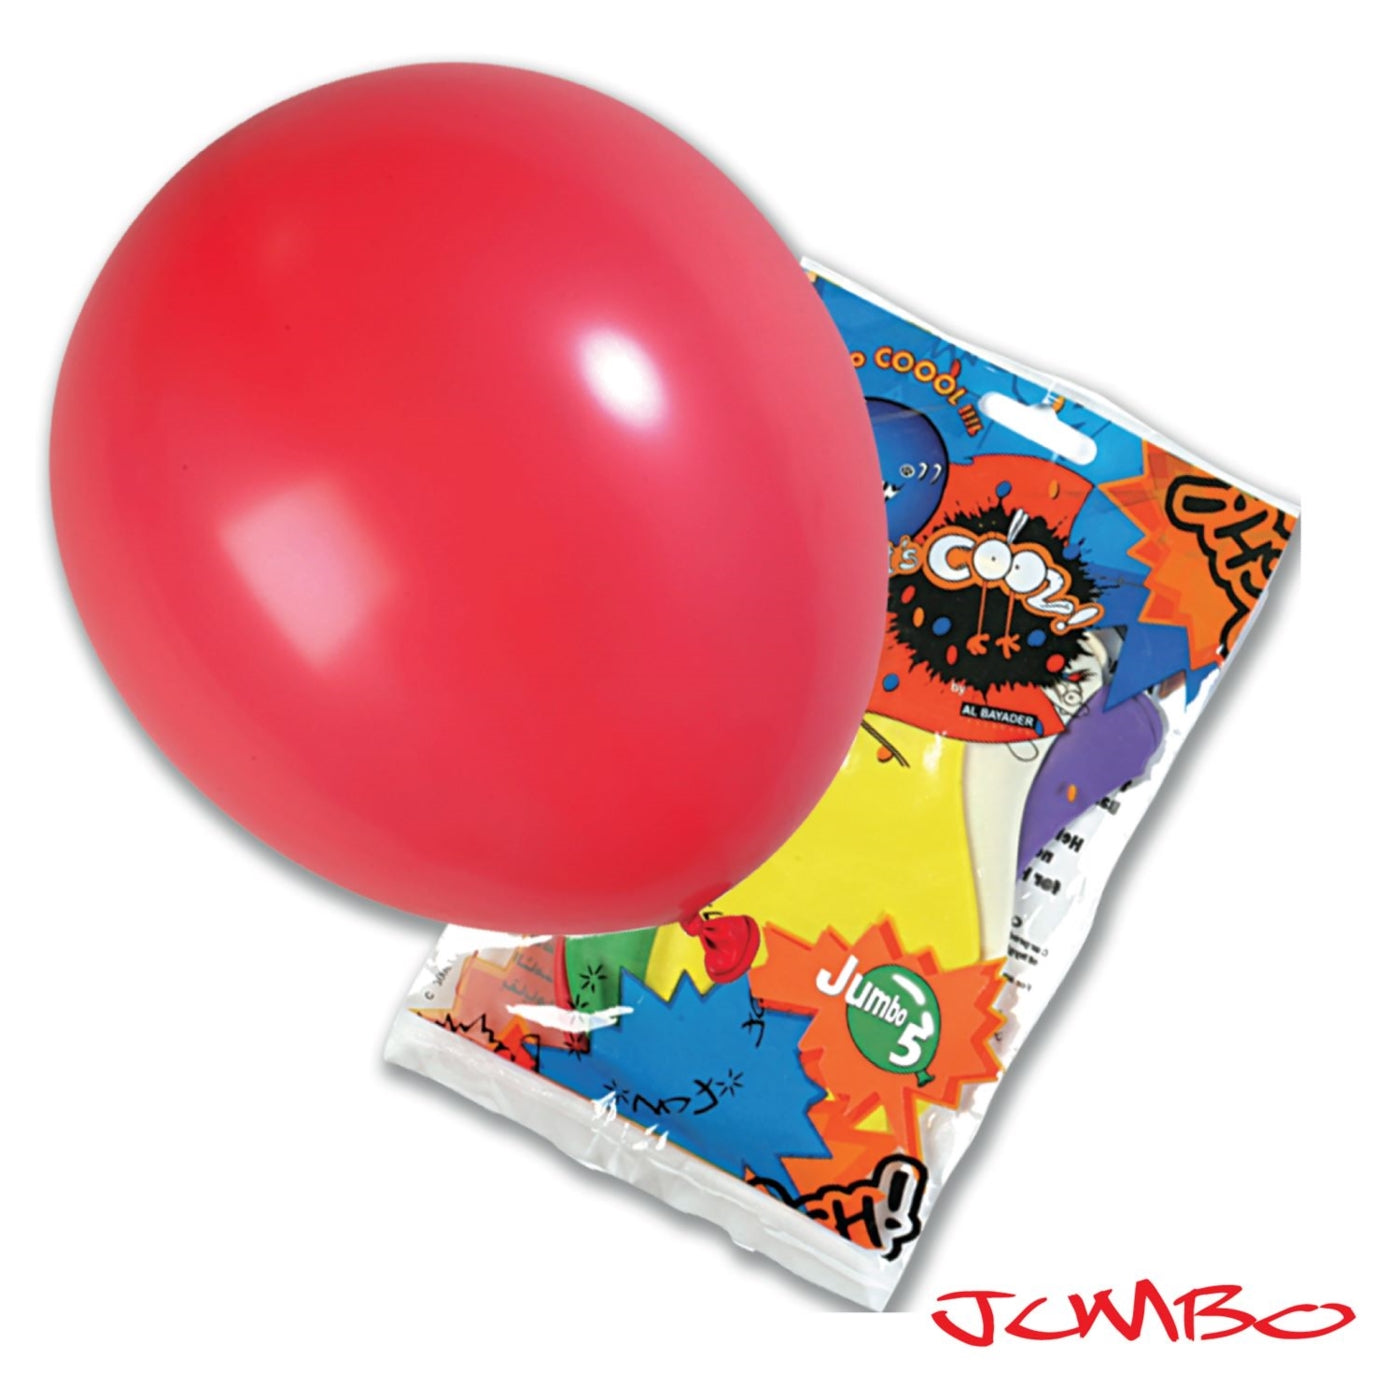 Fun® Its Cool Balloons - Jumbo 5pcs